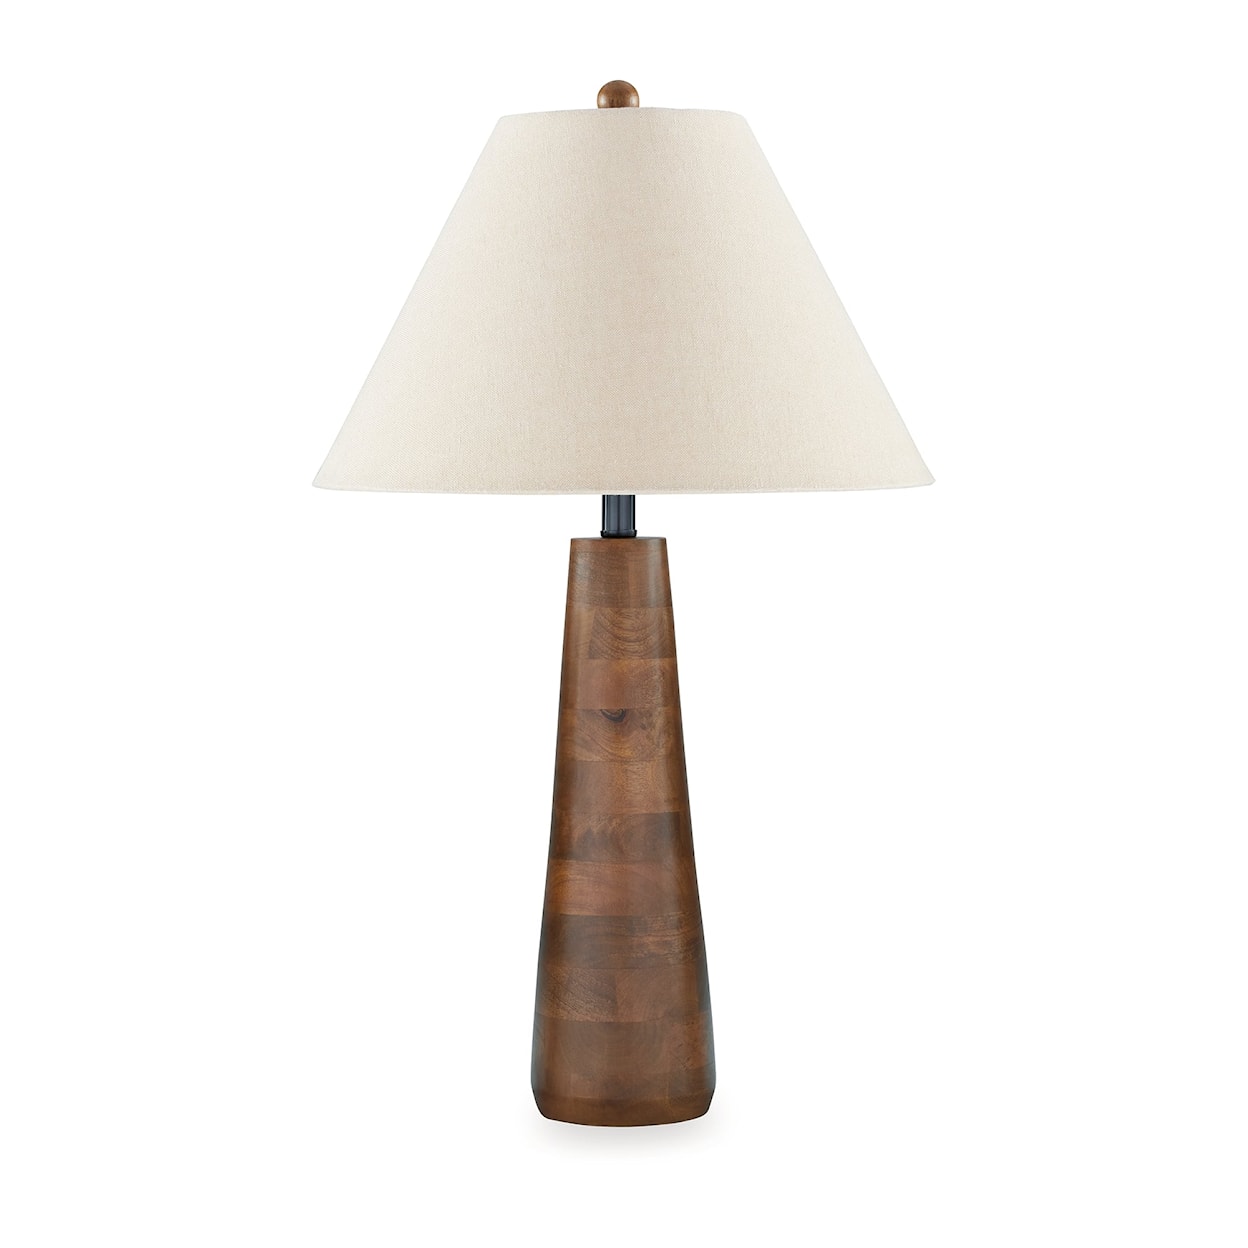 Benchcraft Danset Wood Table Lamp